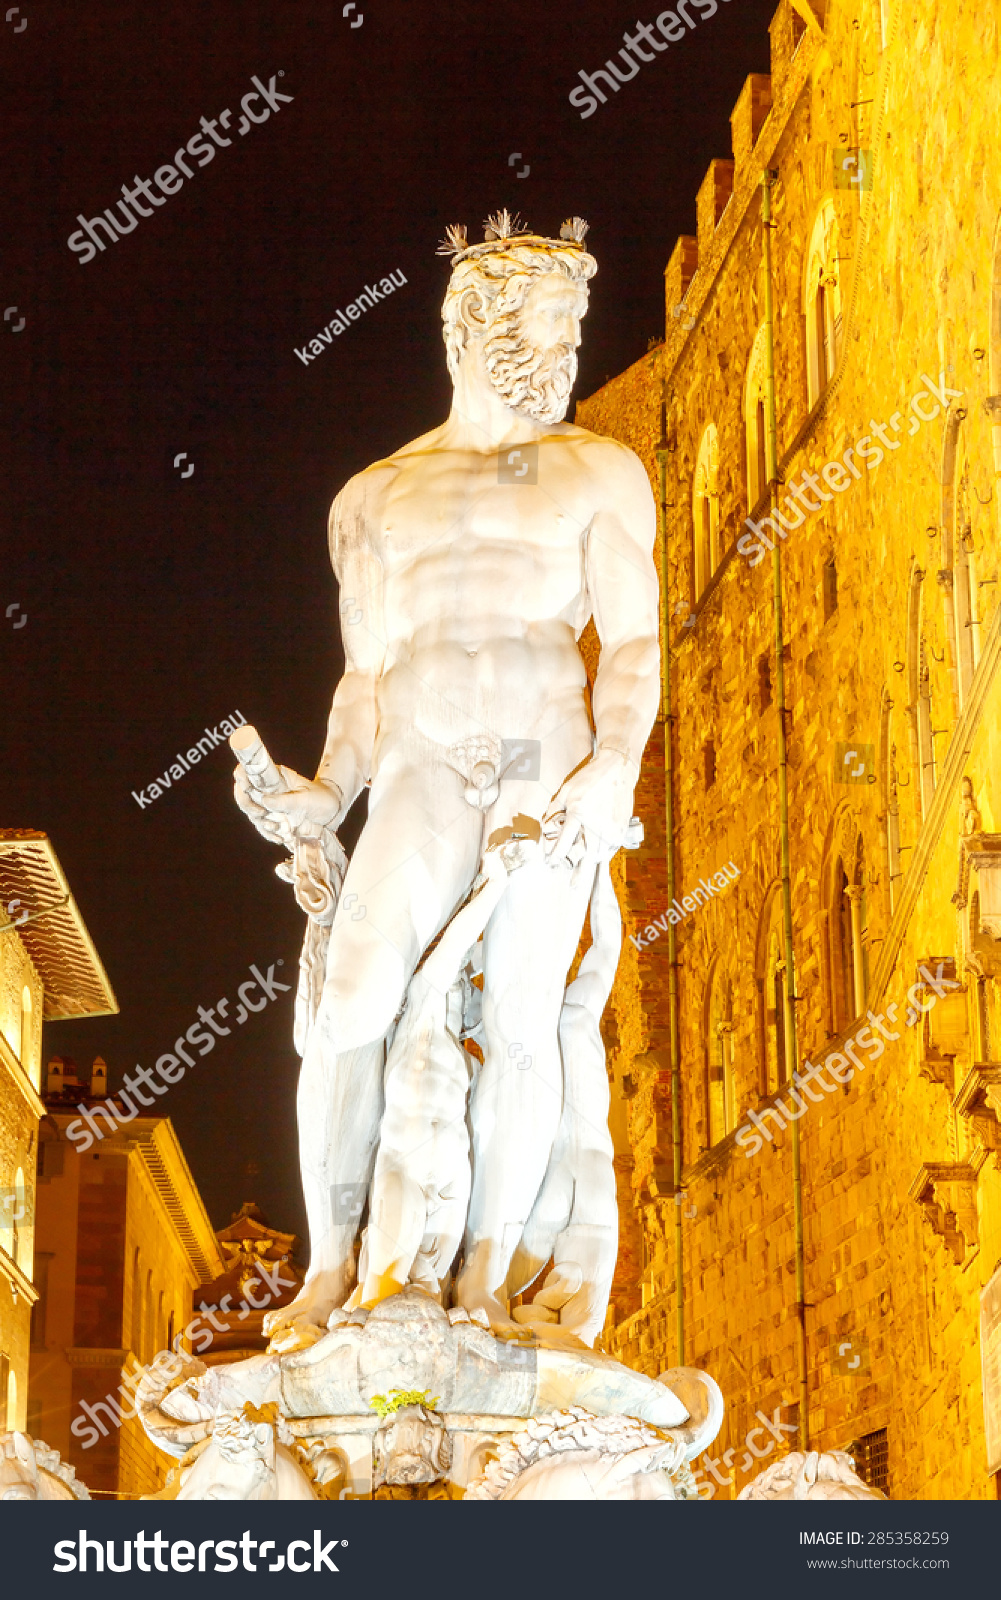 Neptune sculpture installed in the fountain in Piazza della Signoria in Florence at night #285358259